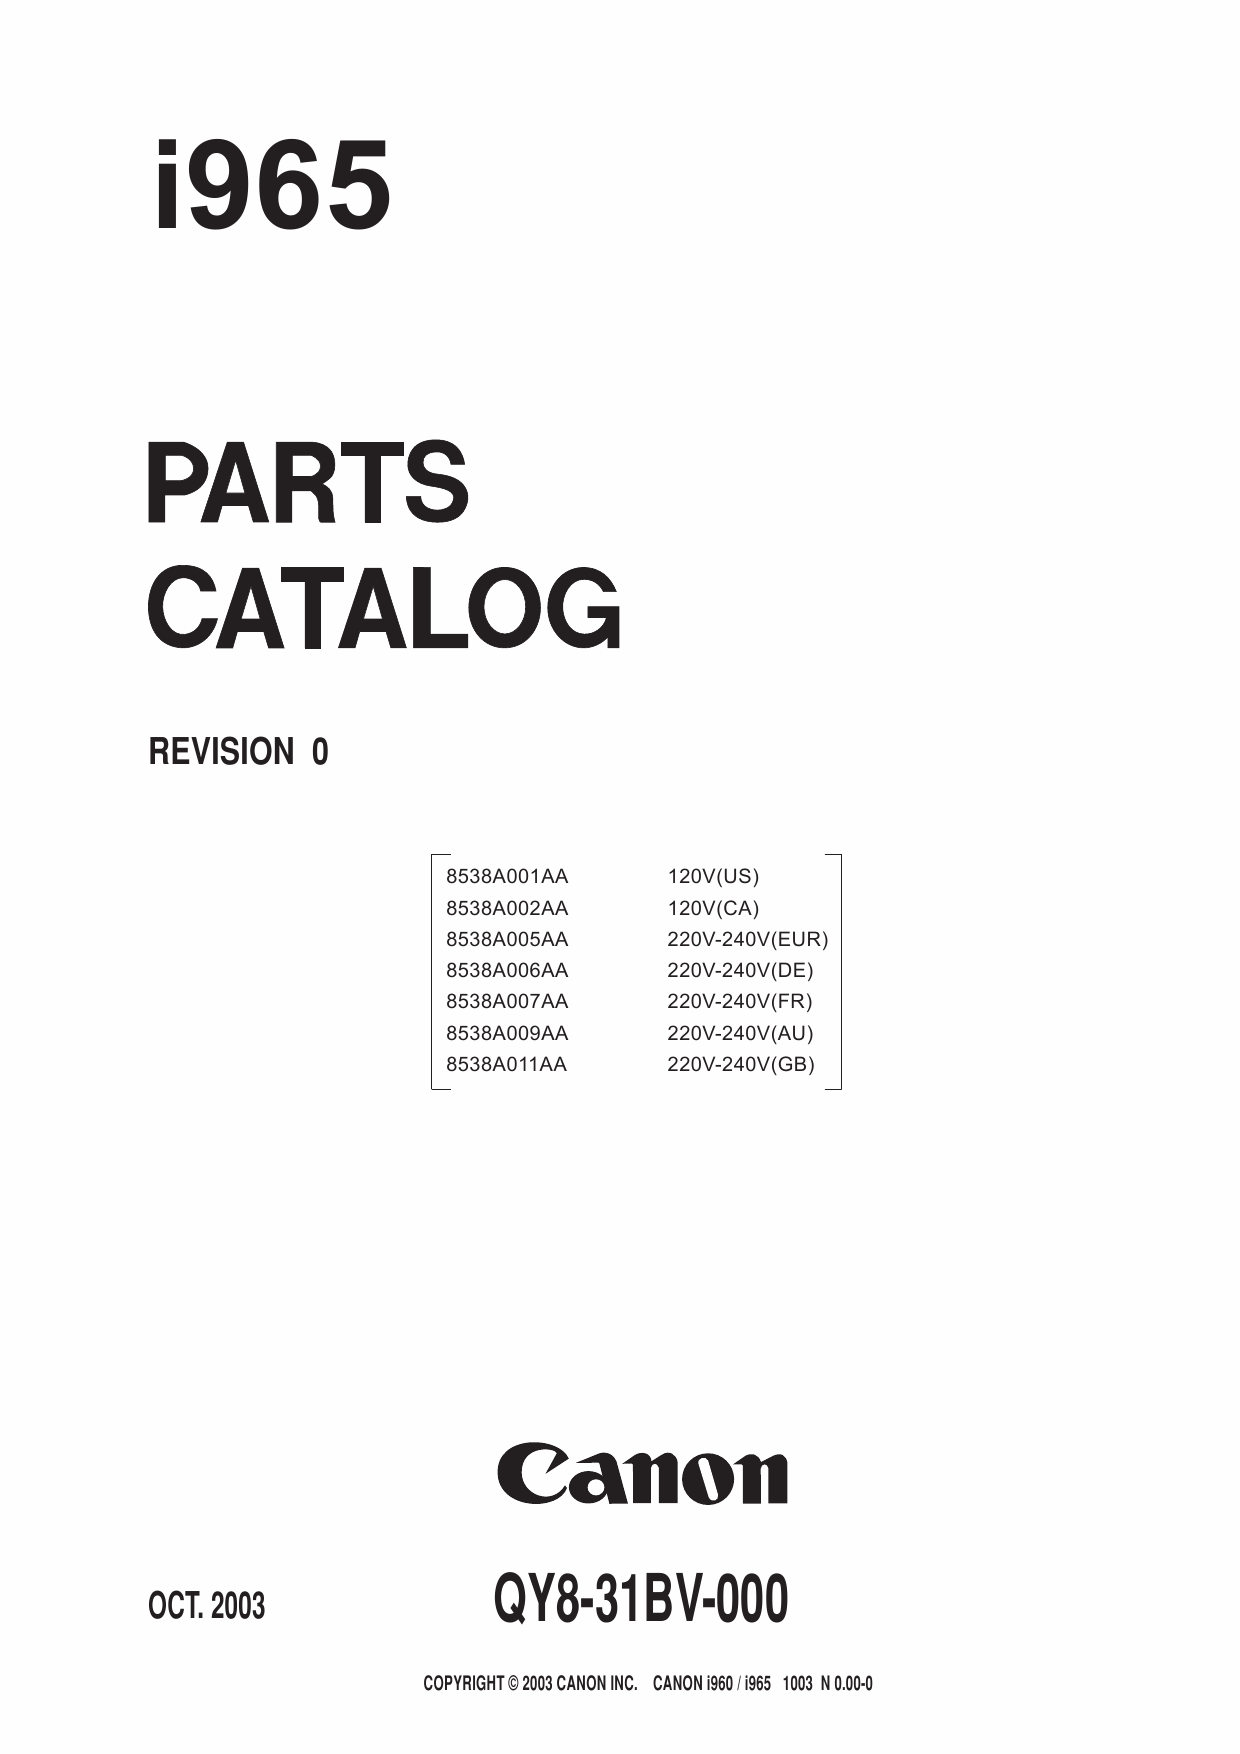 Canon PIXUS i965 Parts Catalog Manual-1